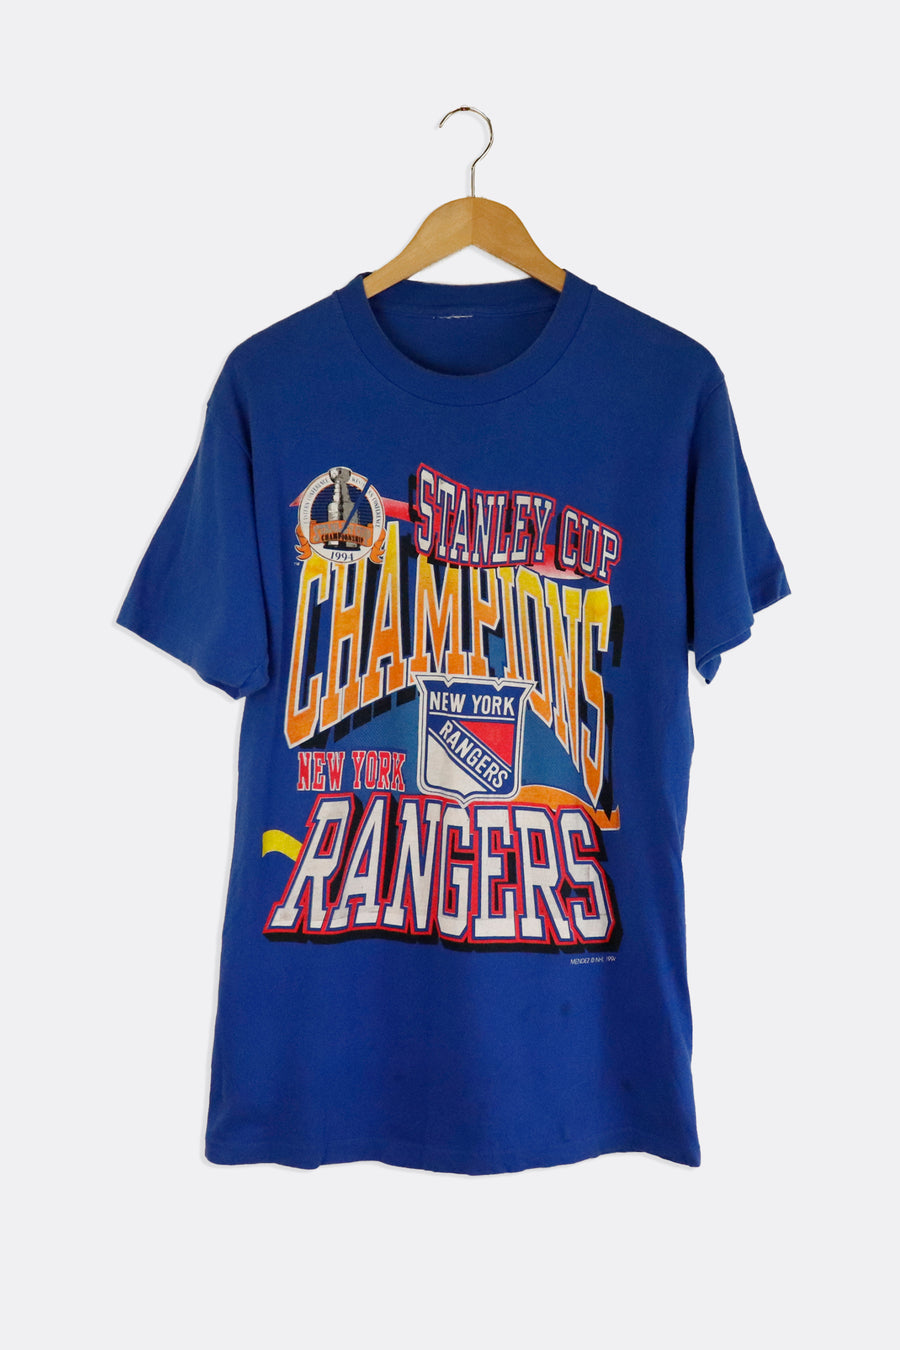 Vintage 1994 Stanley Cup Champions New York Rangers Block Letters Vinyl T Shirt Sz M